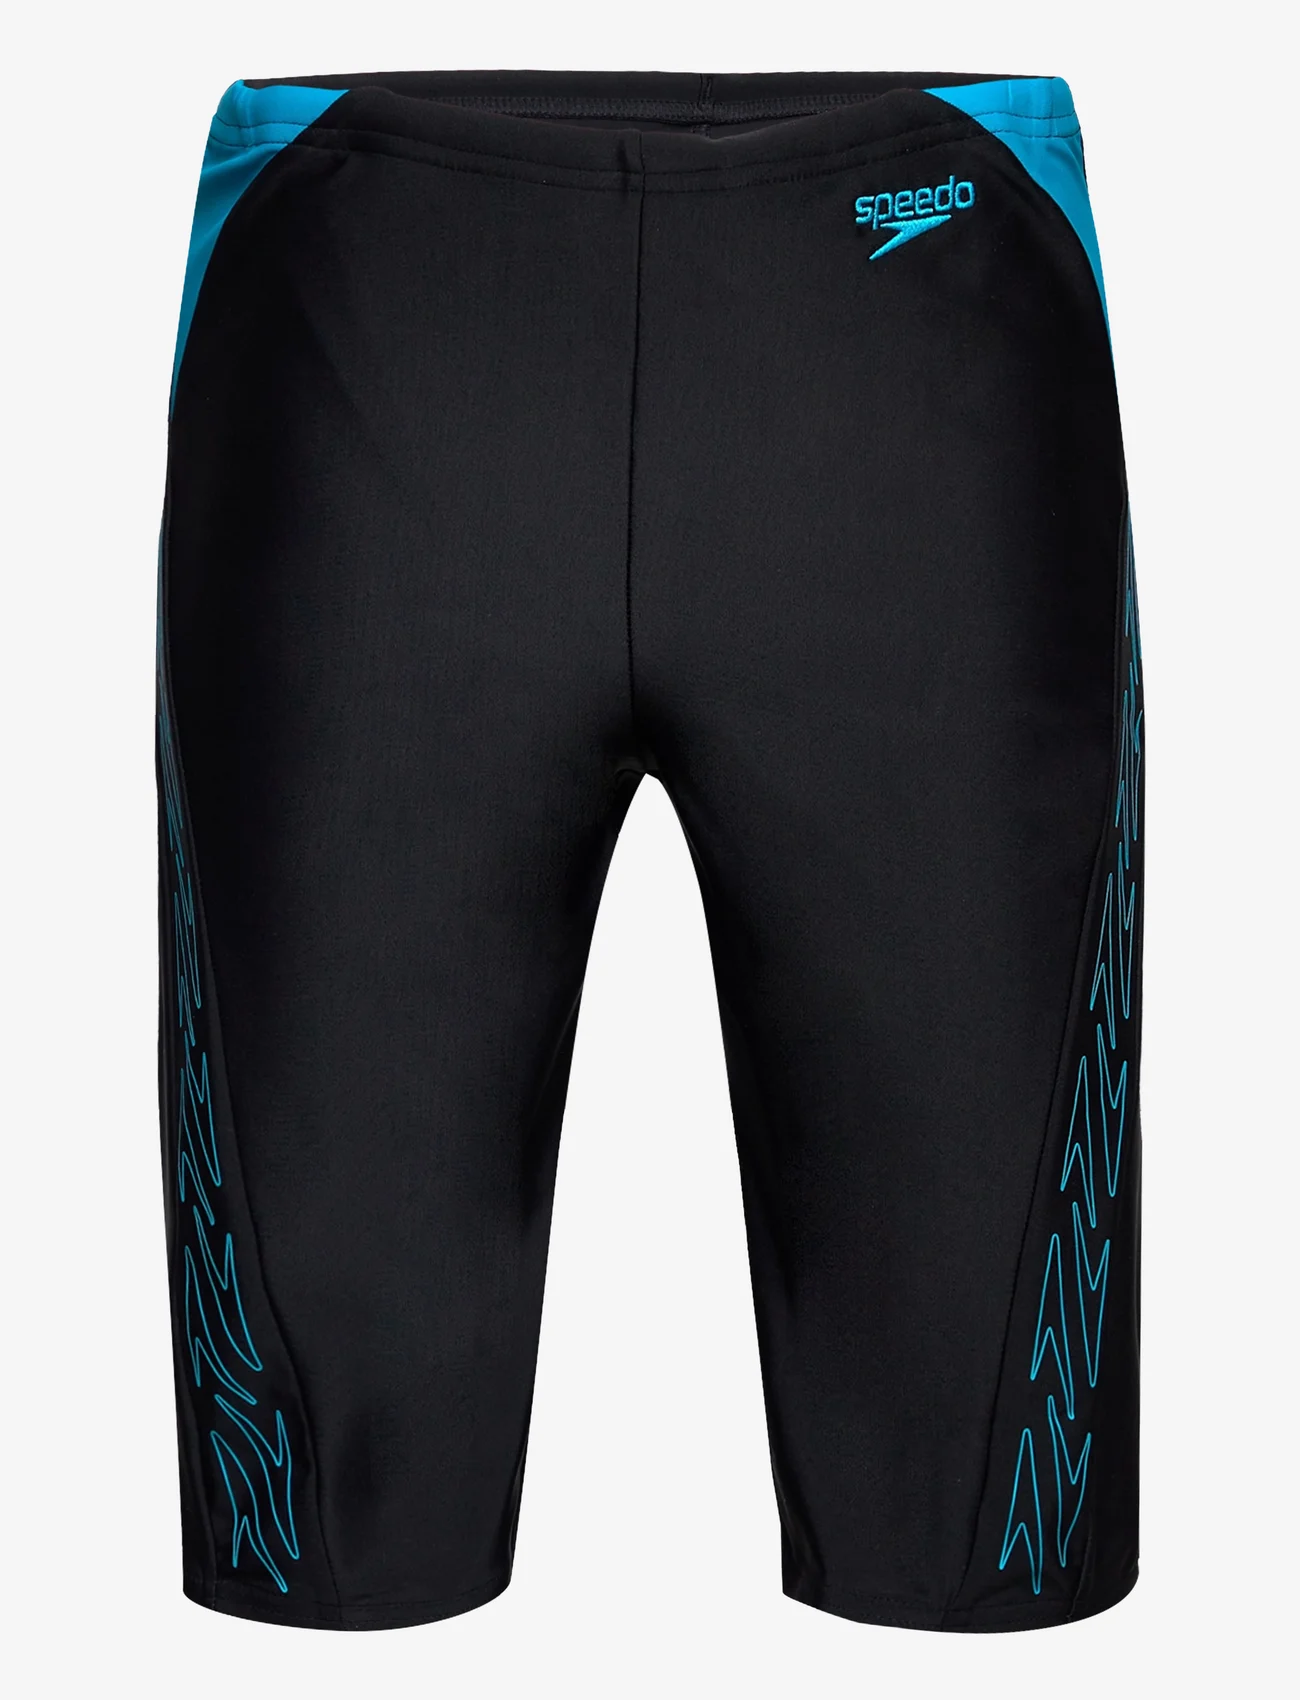 Speedo - Boys HyperBoom Splice Jammer - swim shorts - black/blue - 0